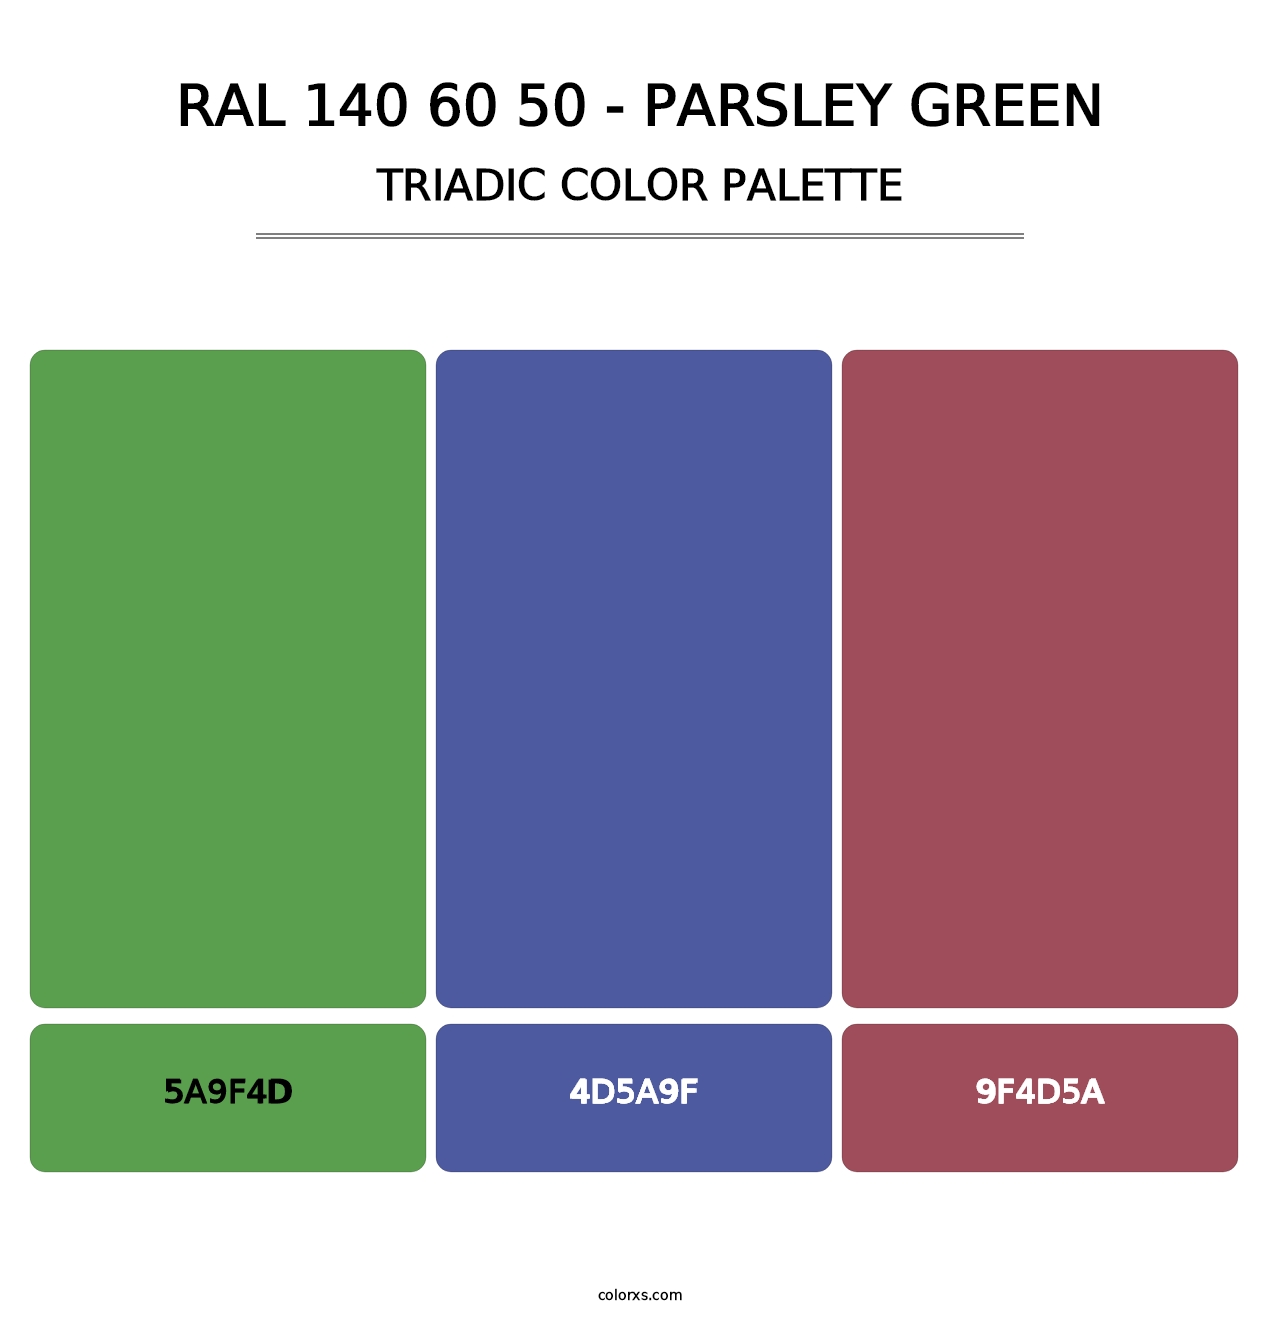 RAL 140 60 50 - Parsley Green - Triadic Color Palette